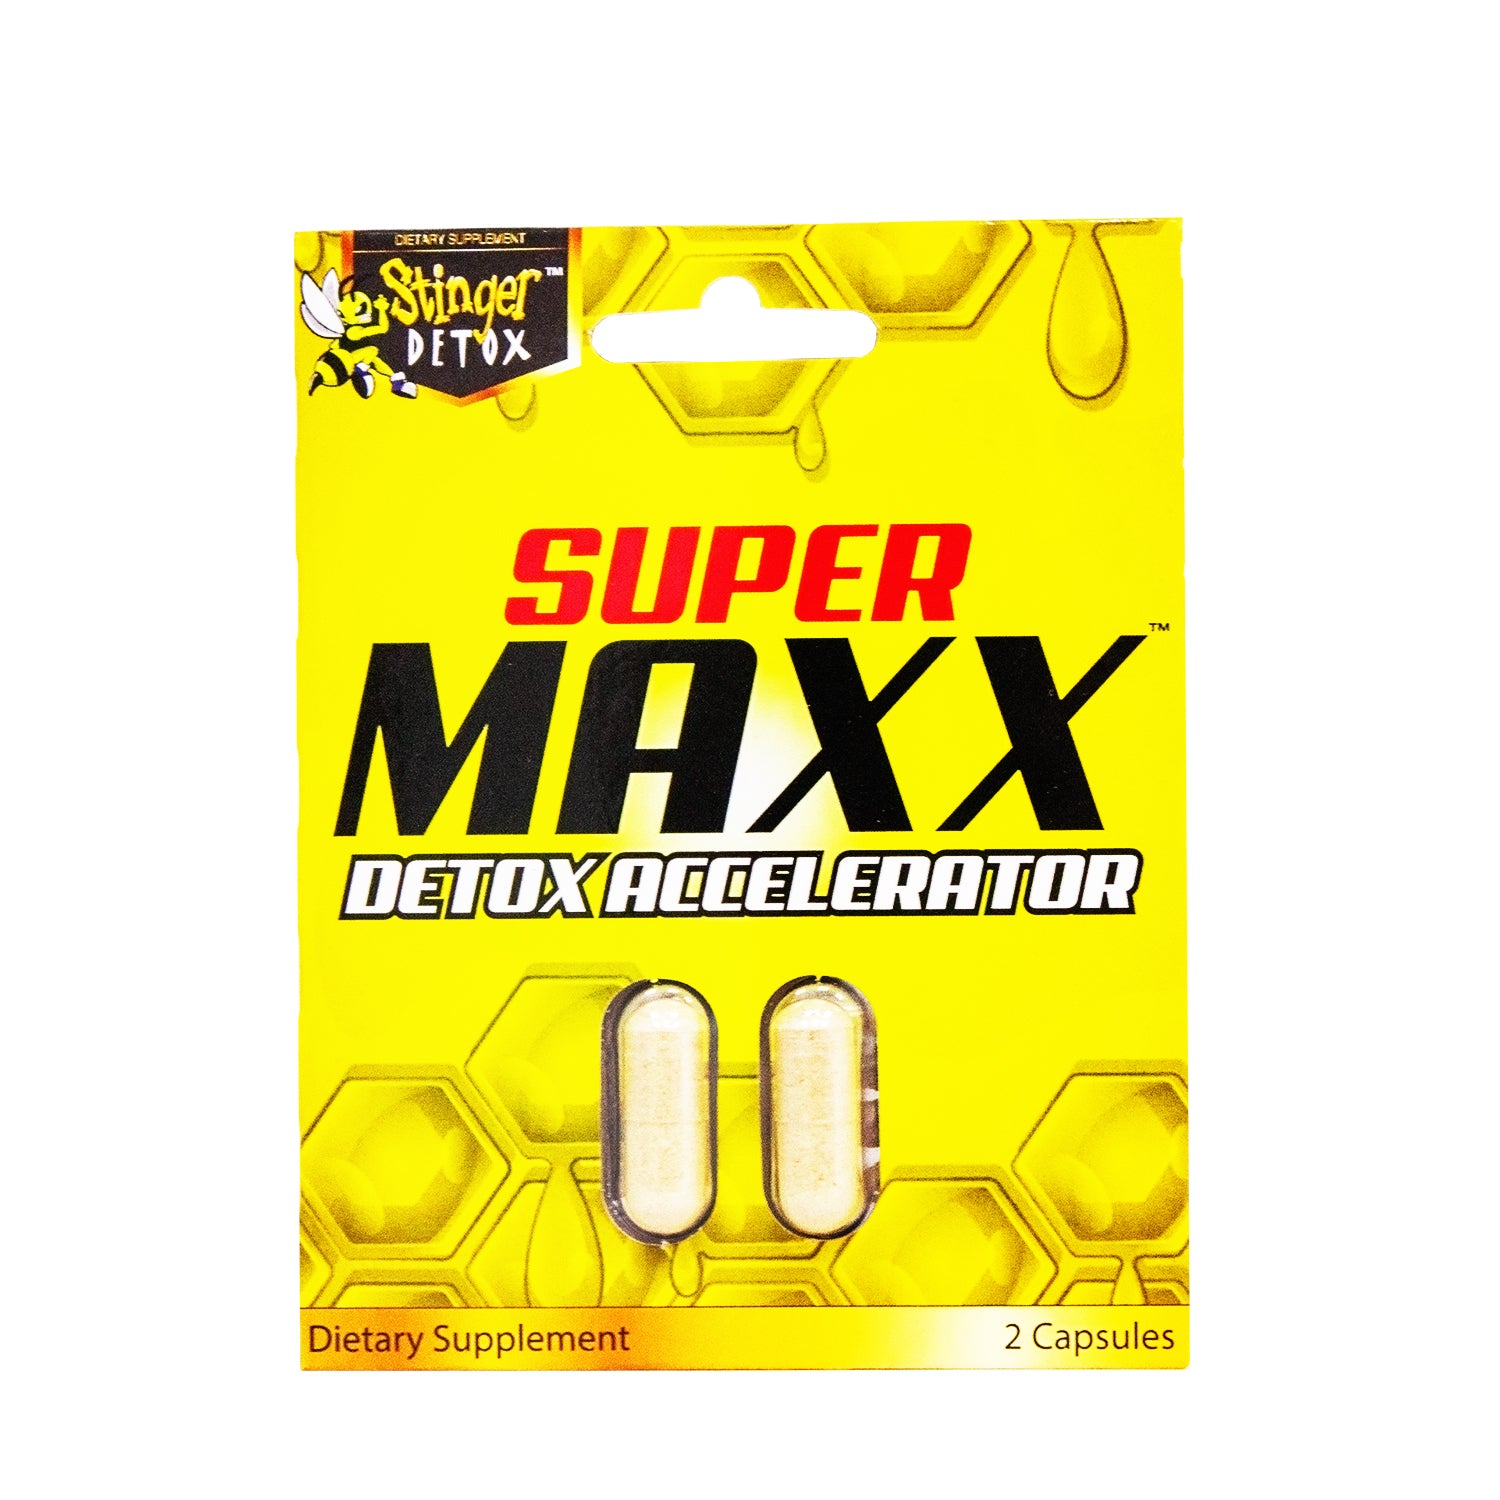 Stinger SuperMAXX Detox Accelerator | 12 Card Pack